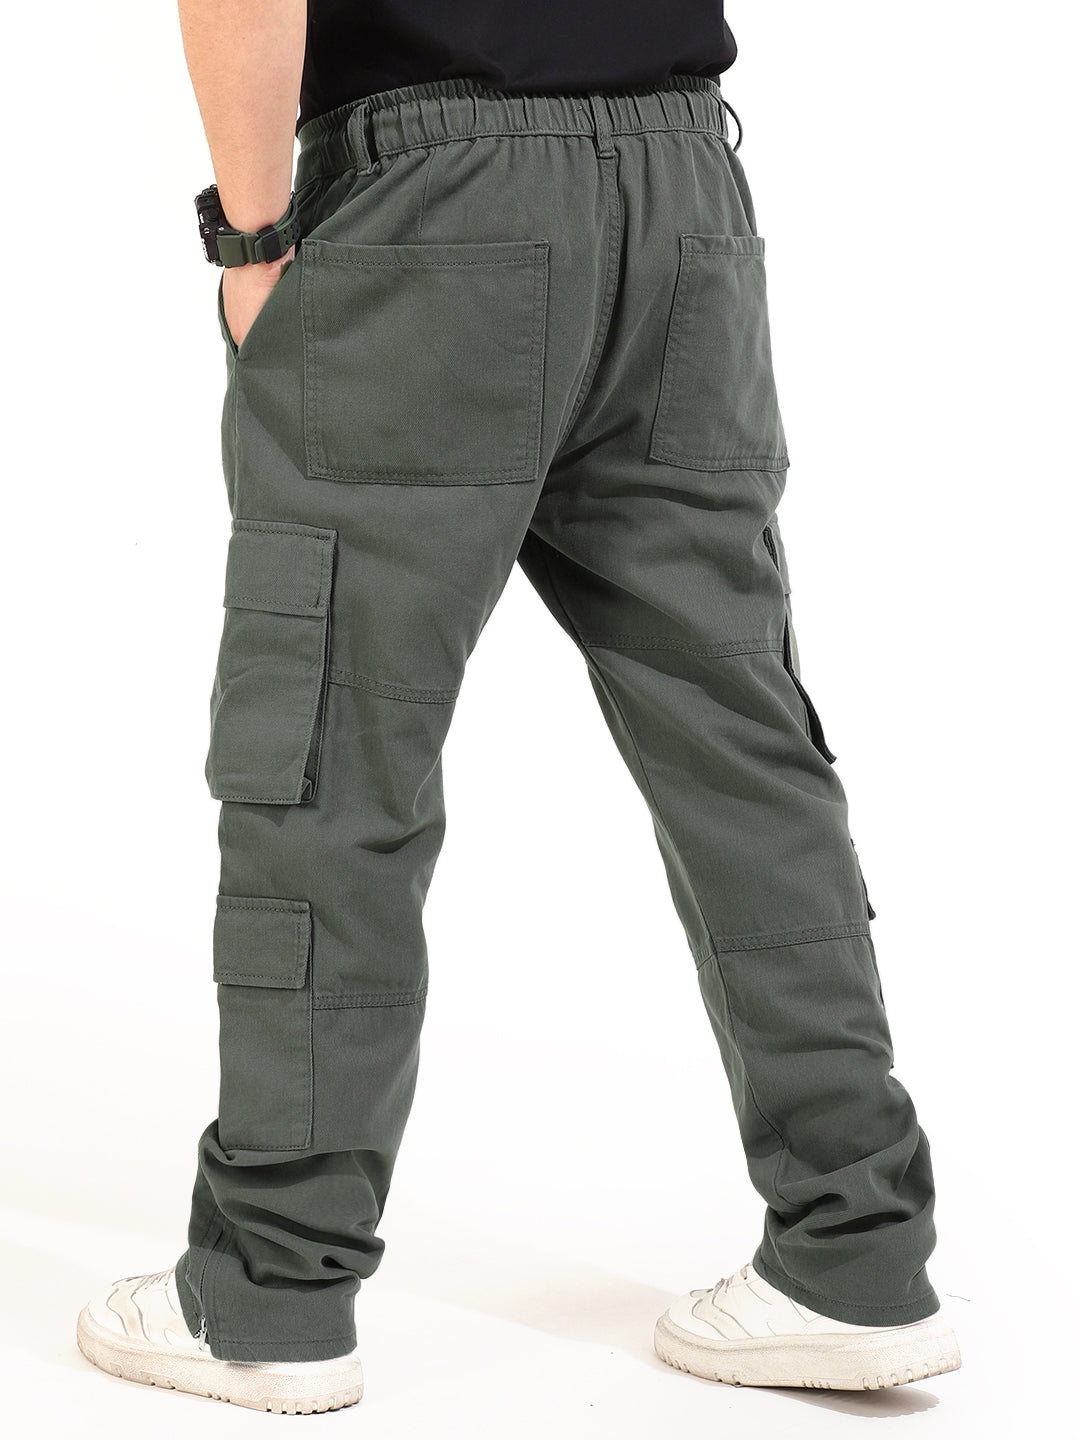 Buy Krystle Men's Slim Fit, Regular Fit Cotton Cargo Pants  (KRY-KHAKHI-CARGO30_Beige, Khaki_30) at Amazon.in